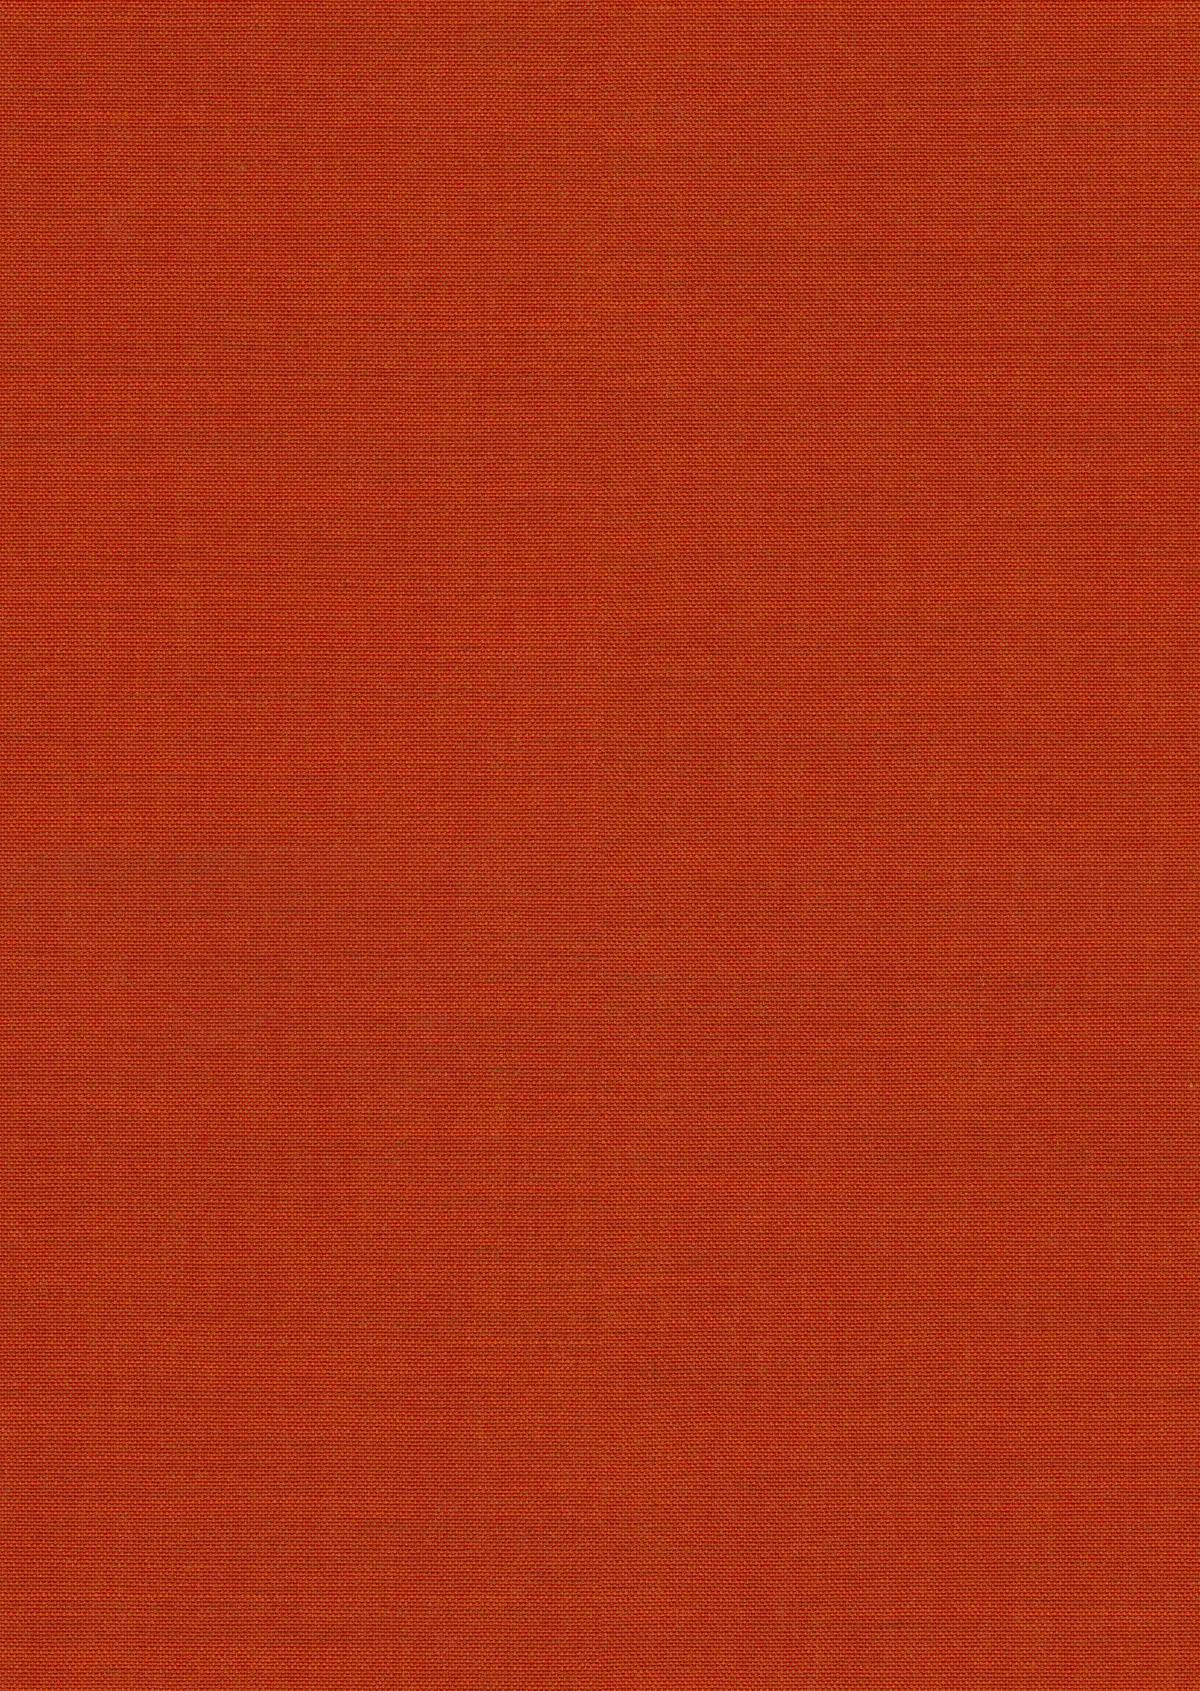 Fabric sample Remix 3 543 orange